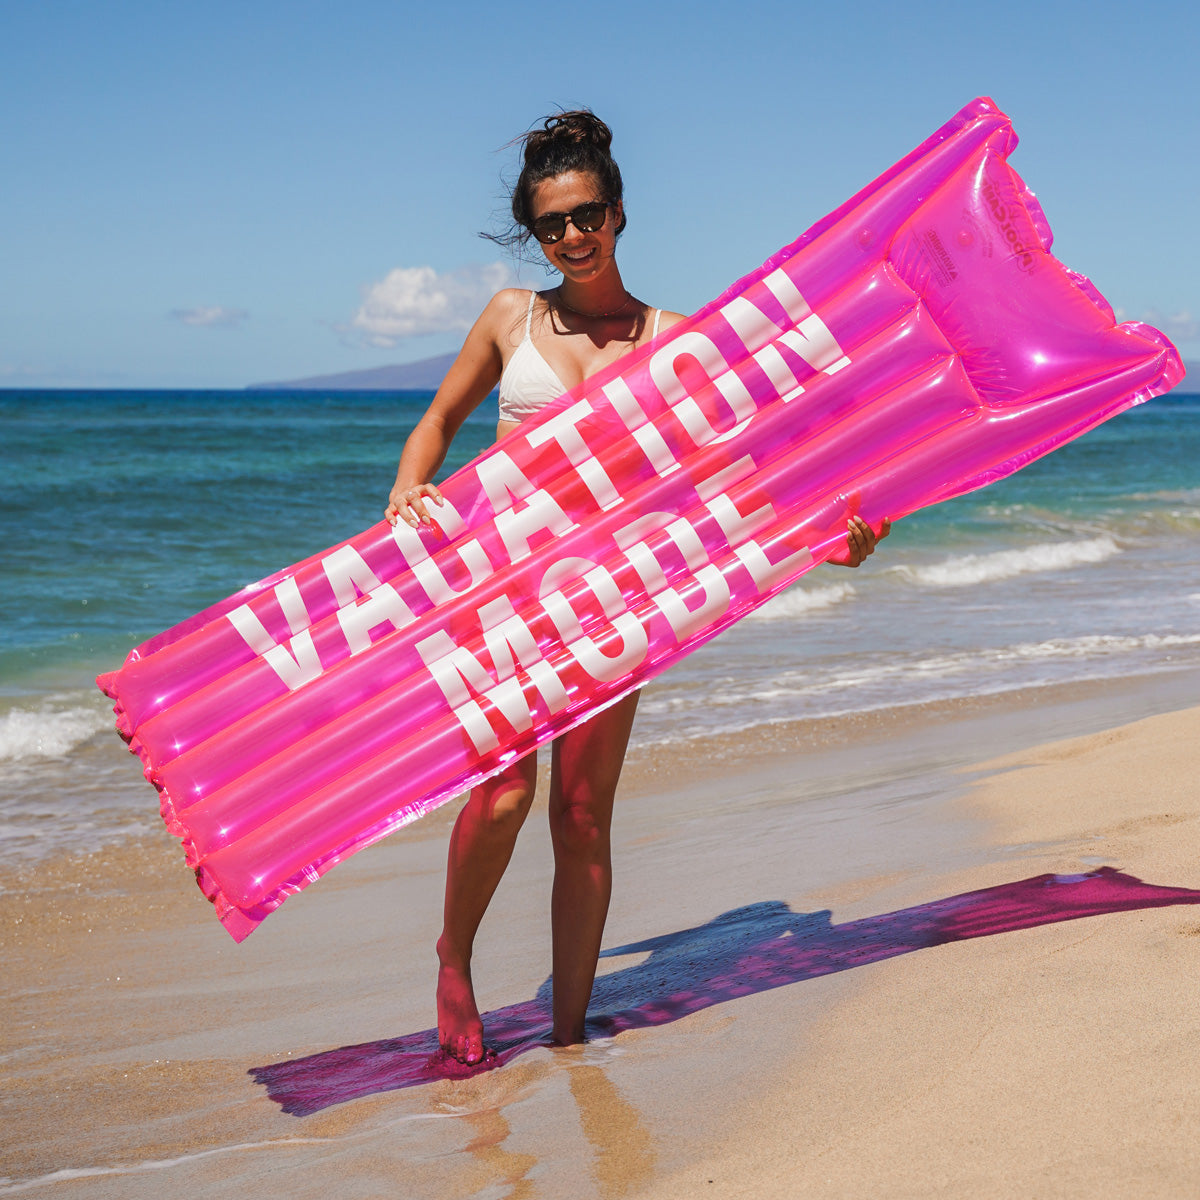 SplashParty Pillow Raft - Bubblegum Pink - "Vacation Mode"